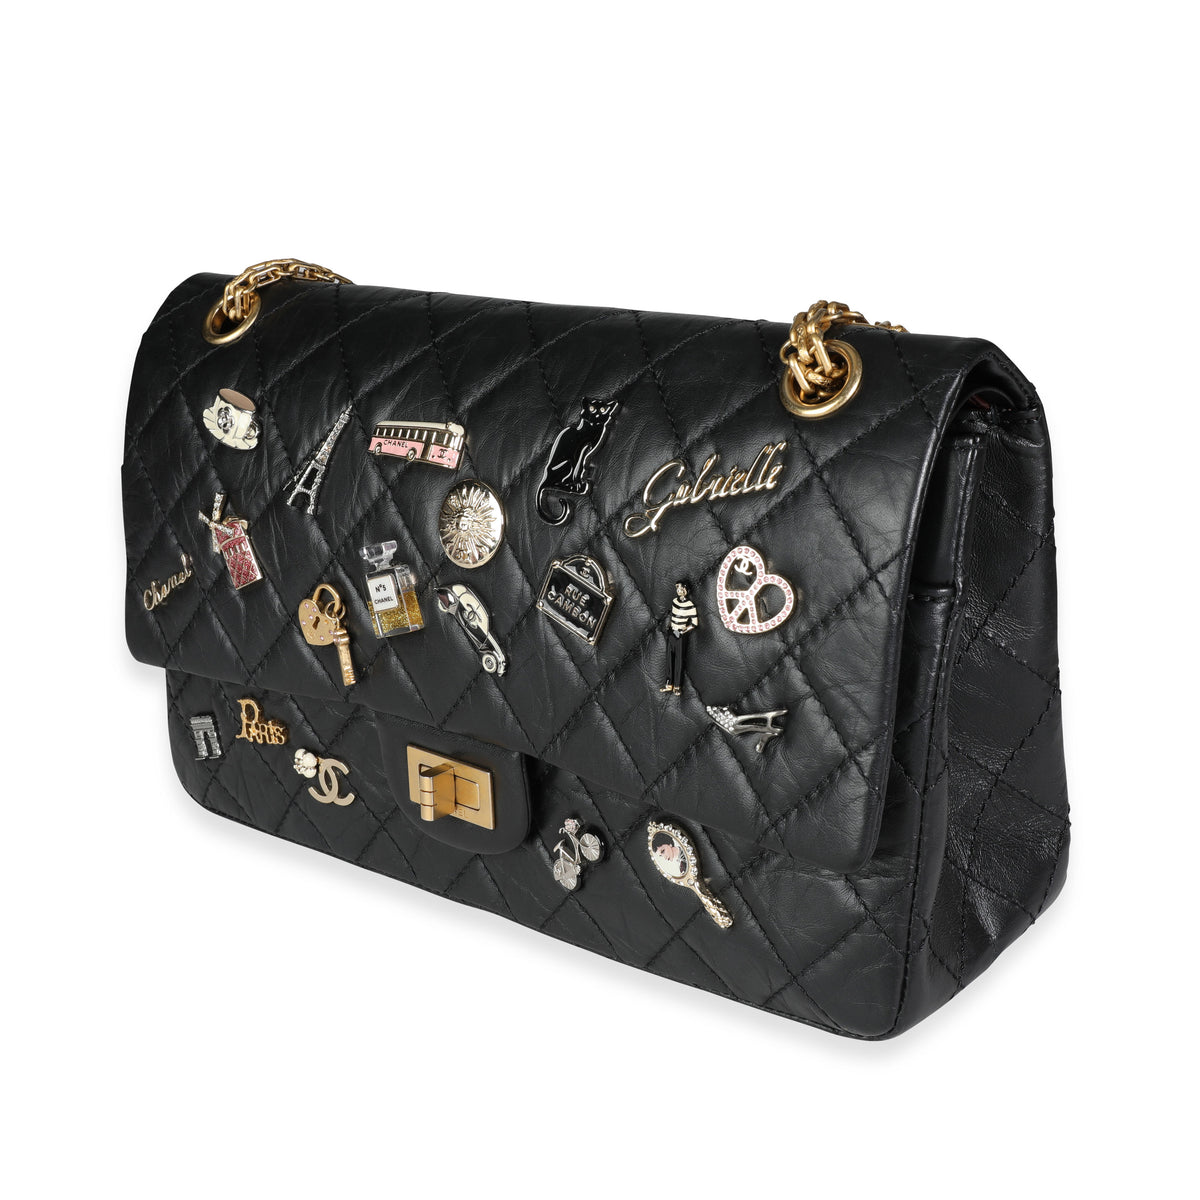 Chanel Charm Reissue 2.55 Crossbody Flap Bag